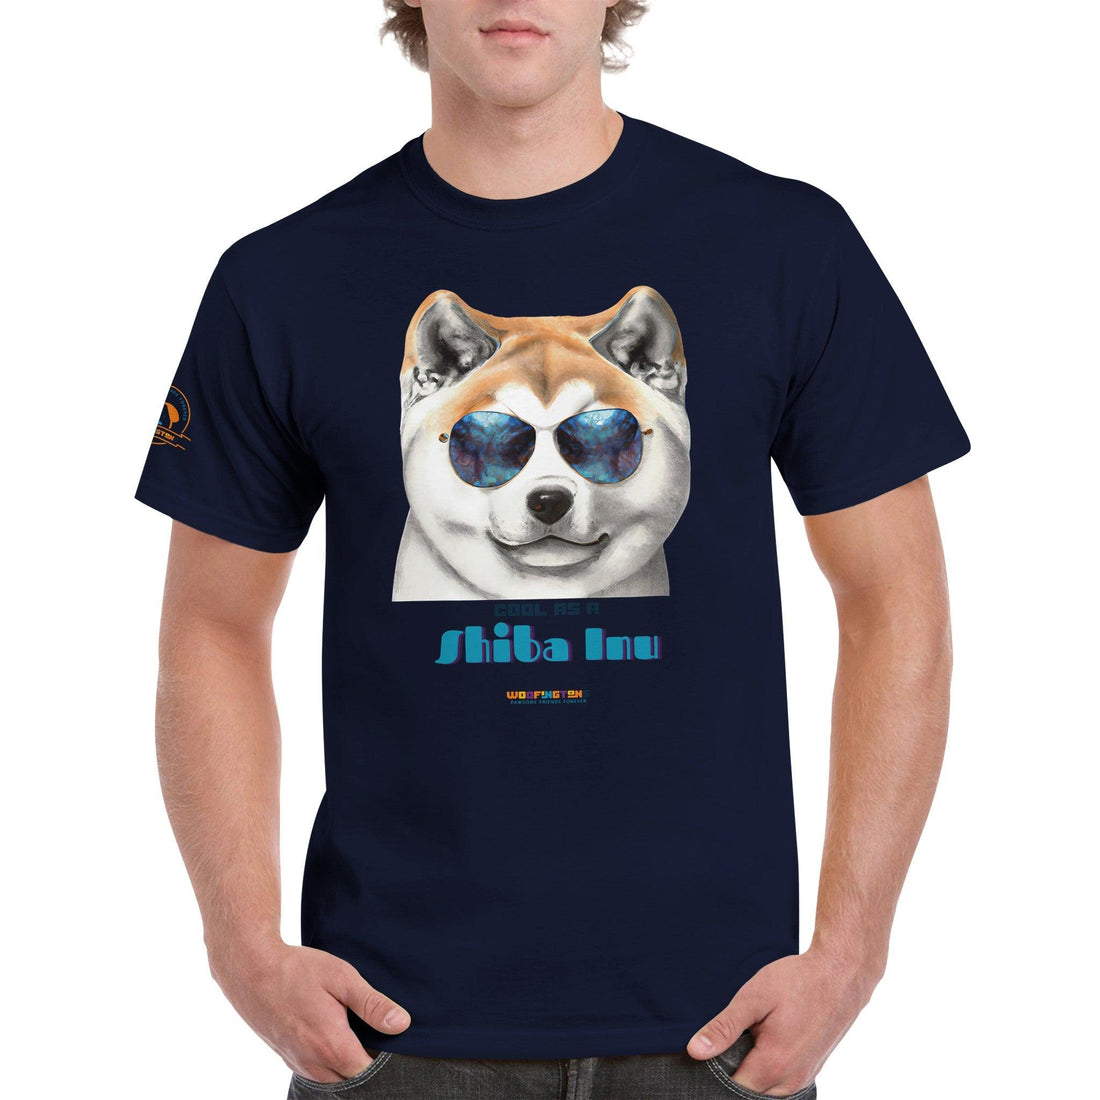 &quot;Cool as a Shiba Inu” - Cool Dog T-Shirt - Woofingtons